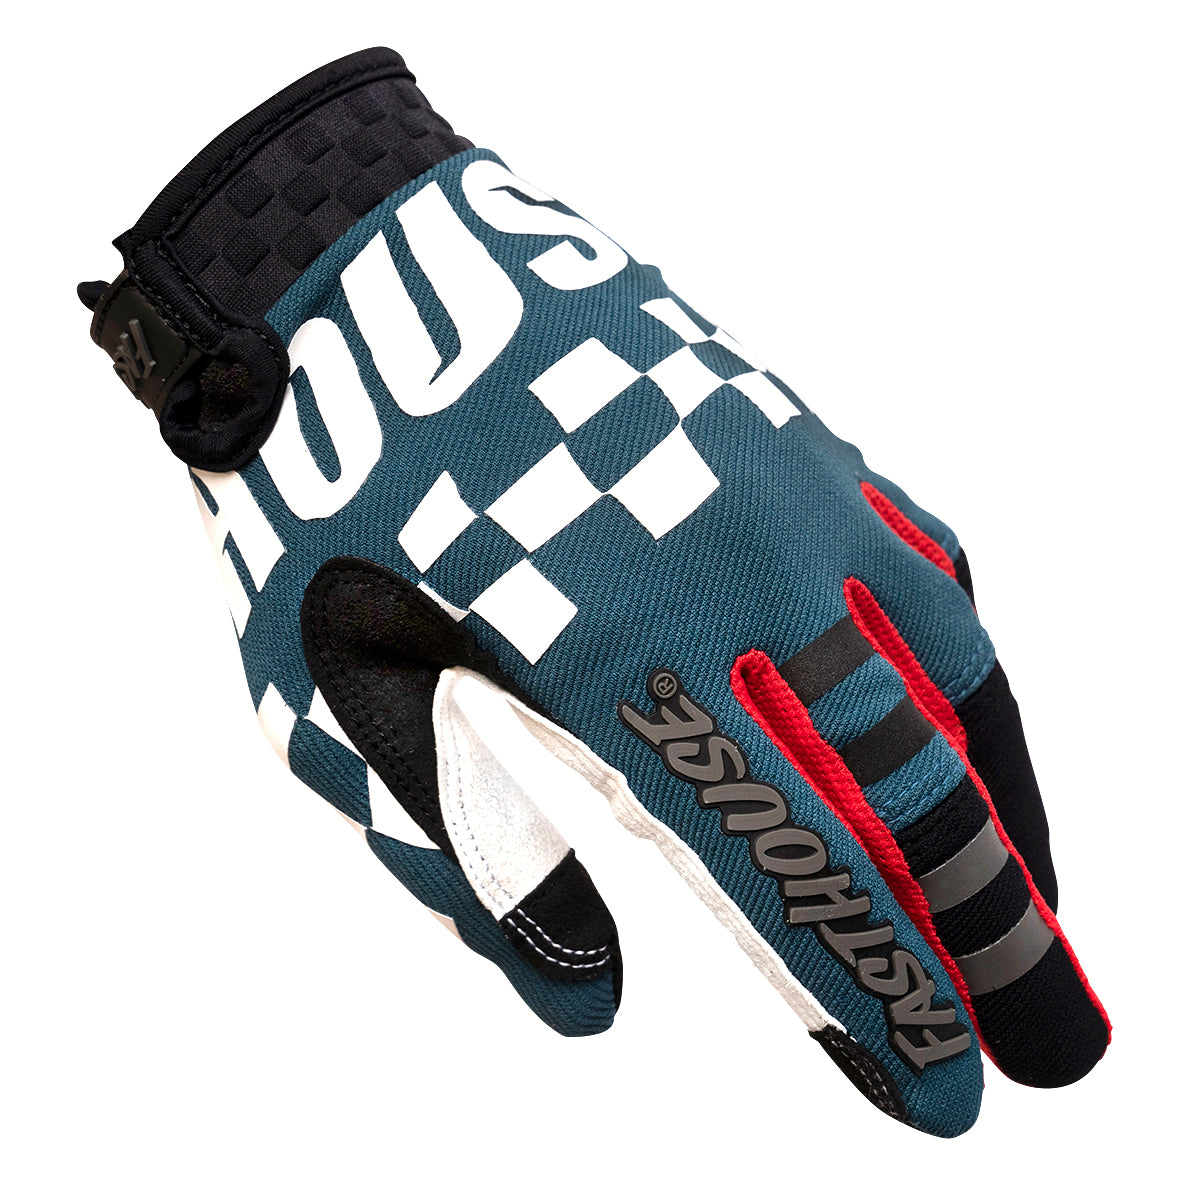 Speed Style Velocity Gloves - Indigo